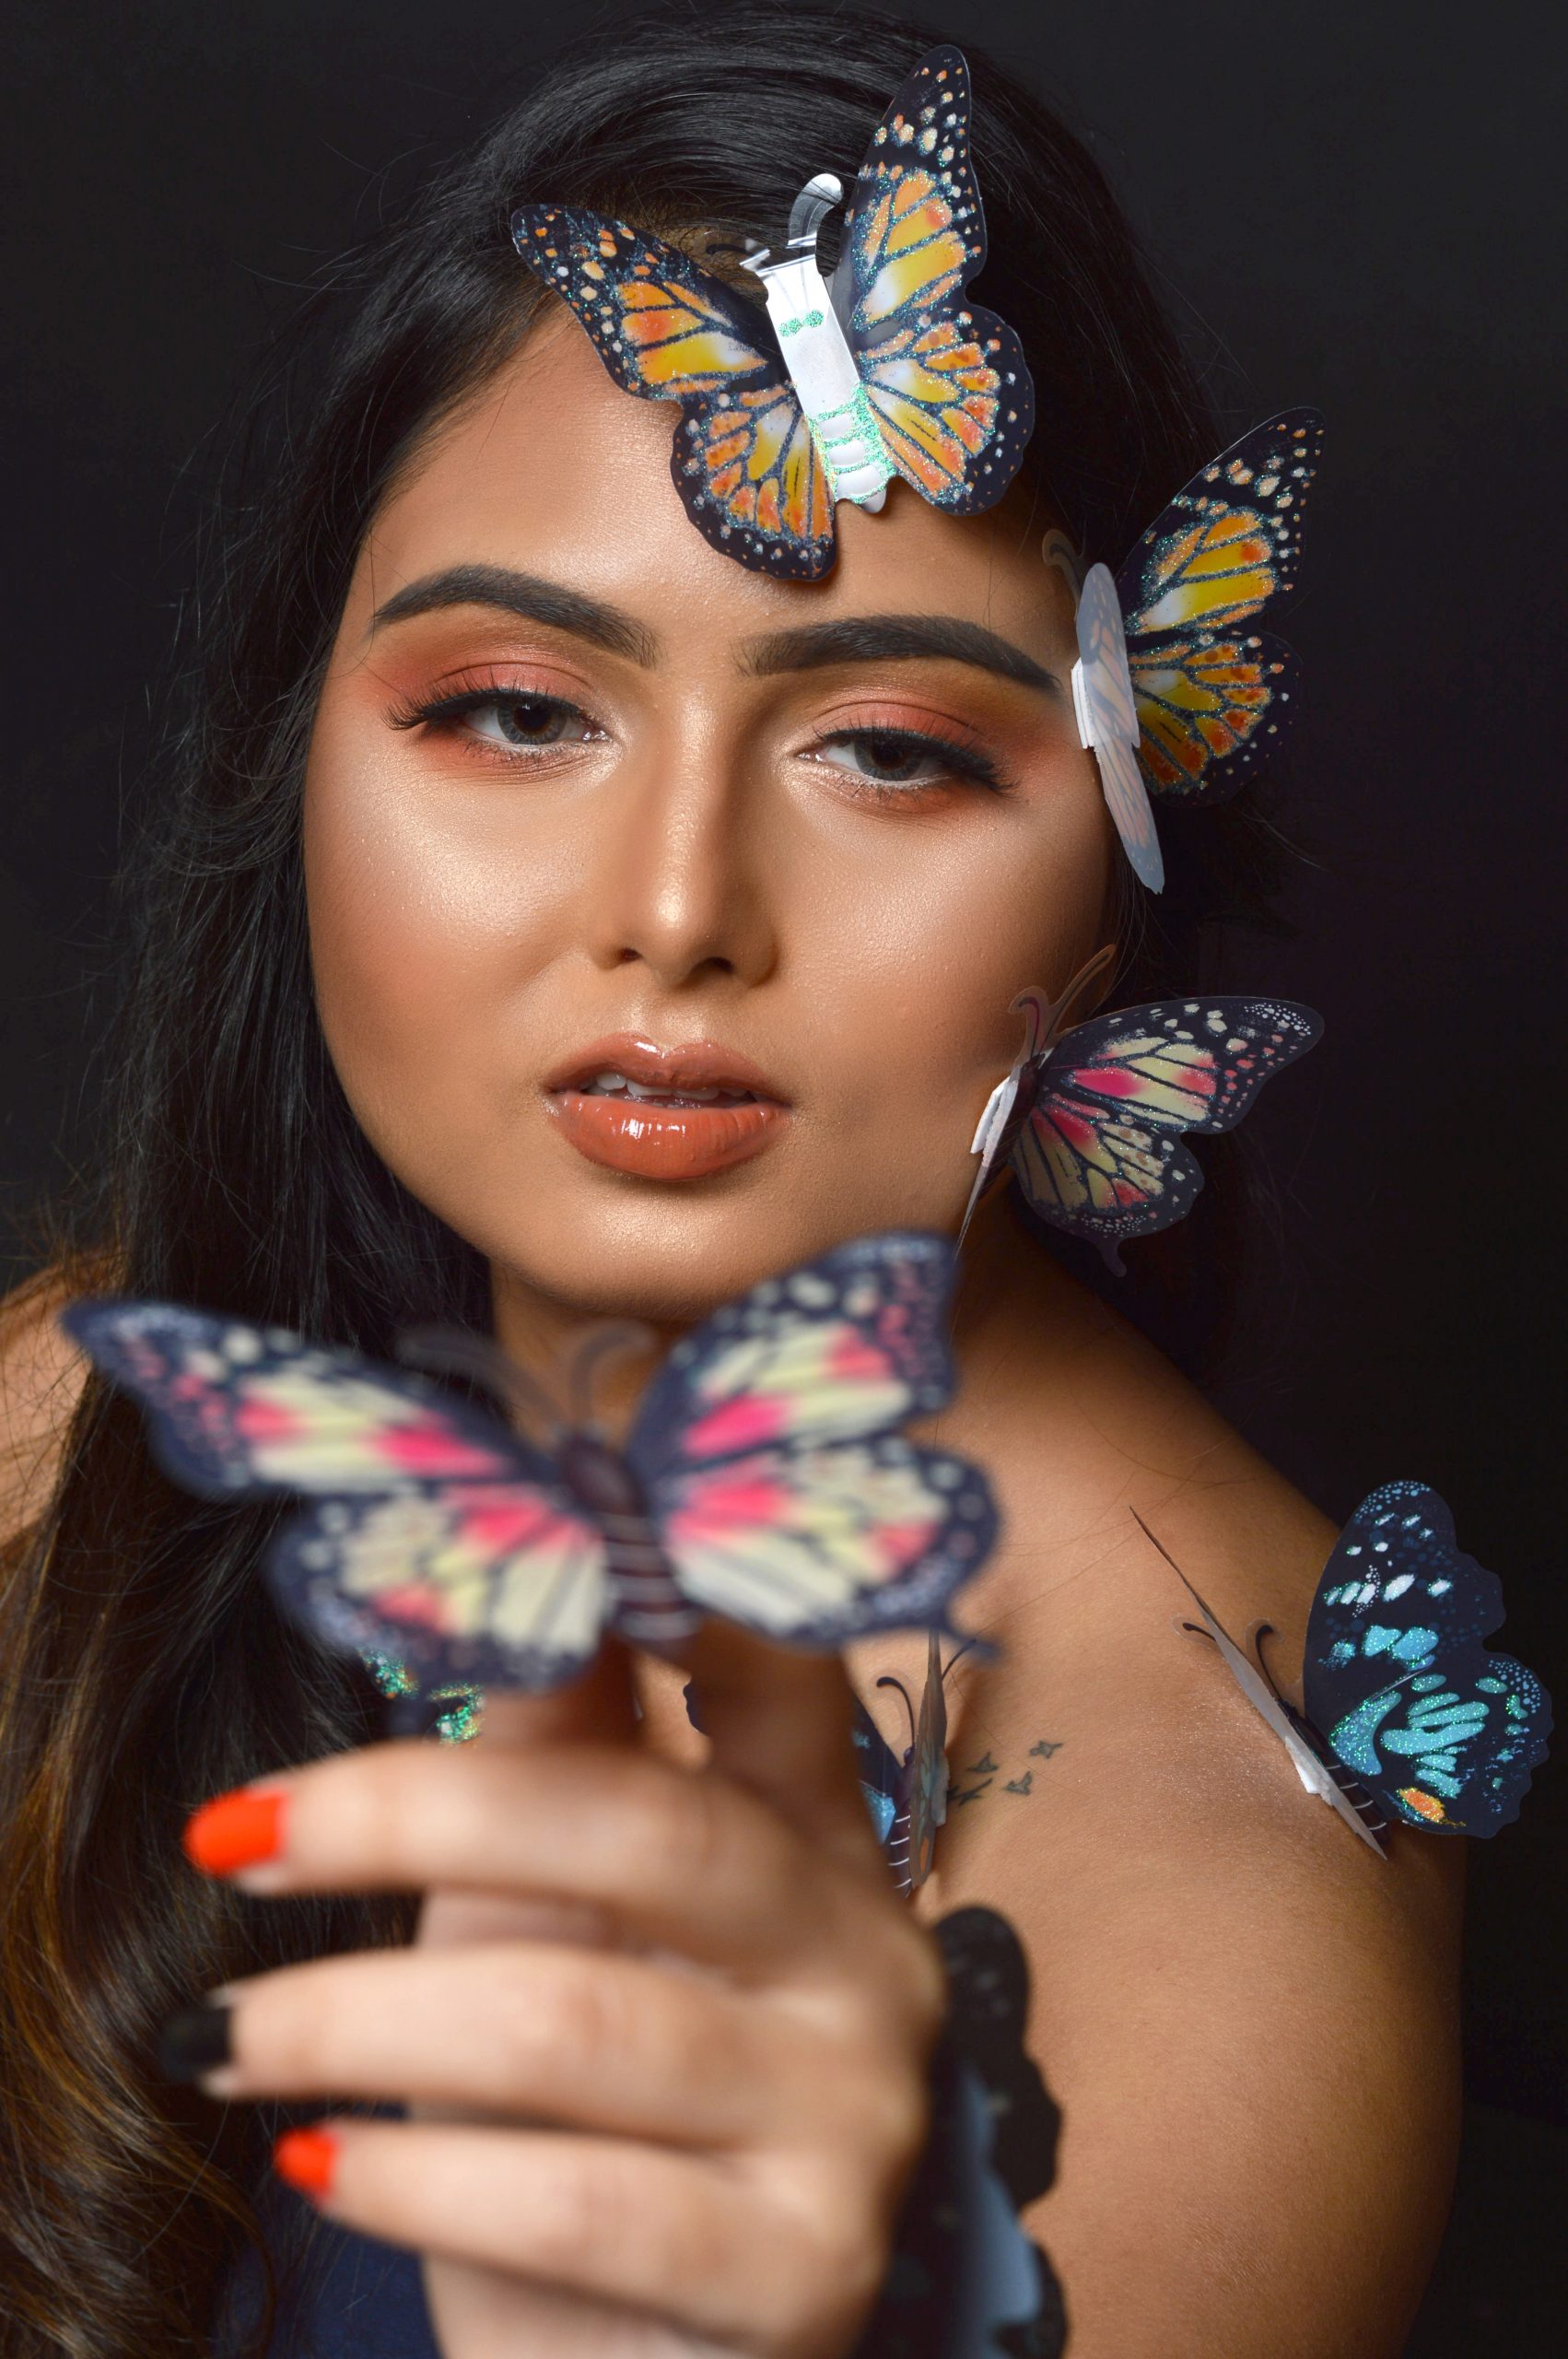 A girl with butterflies